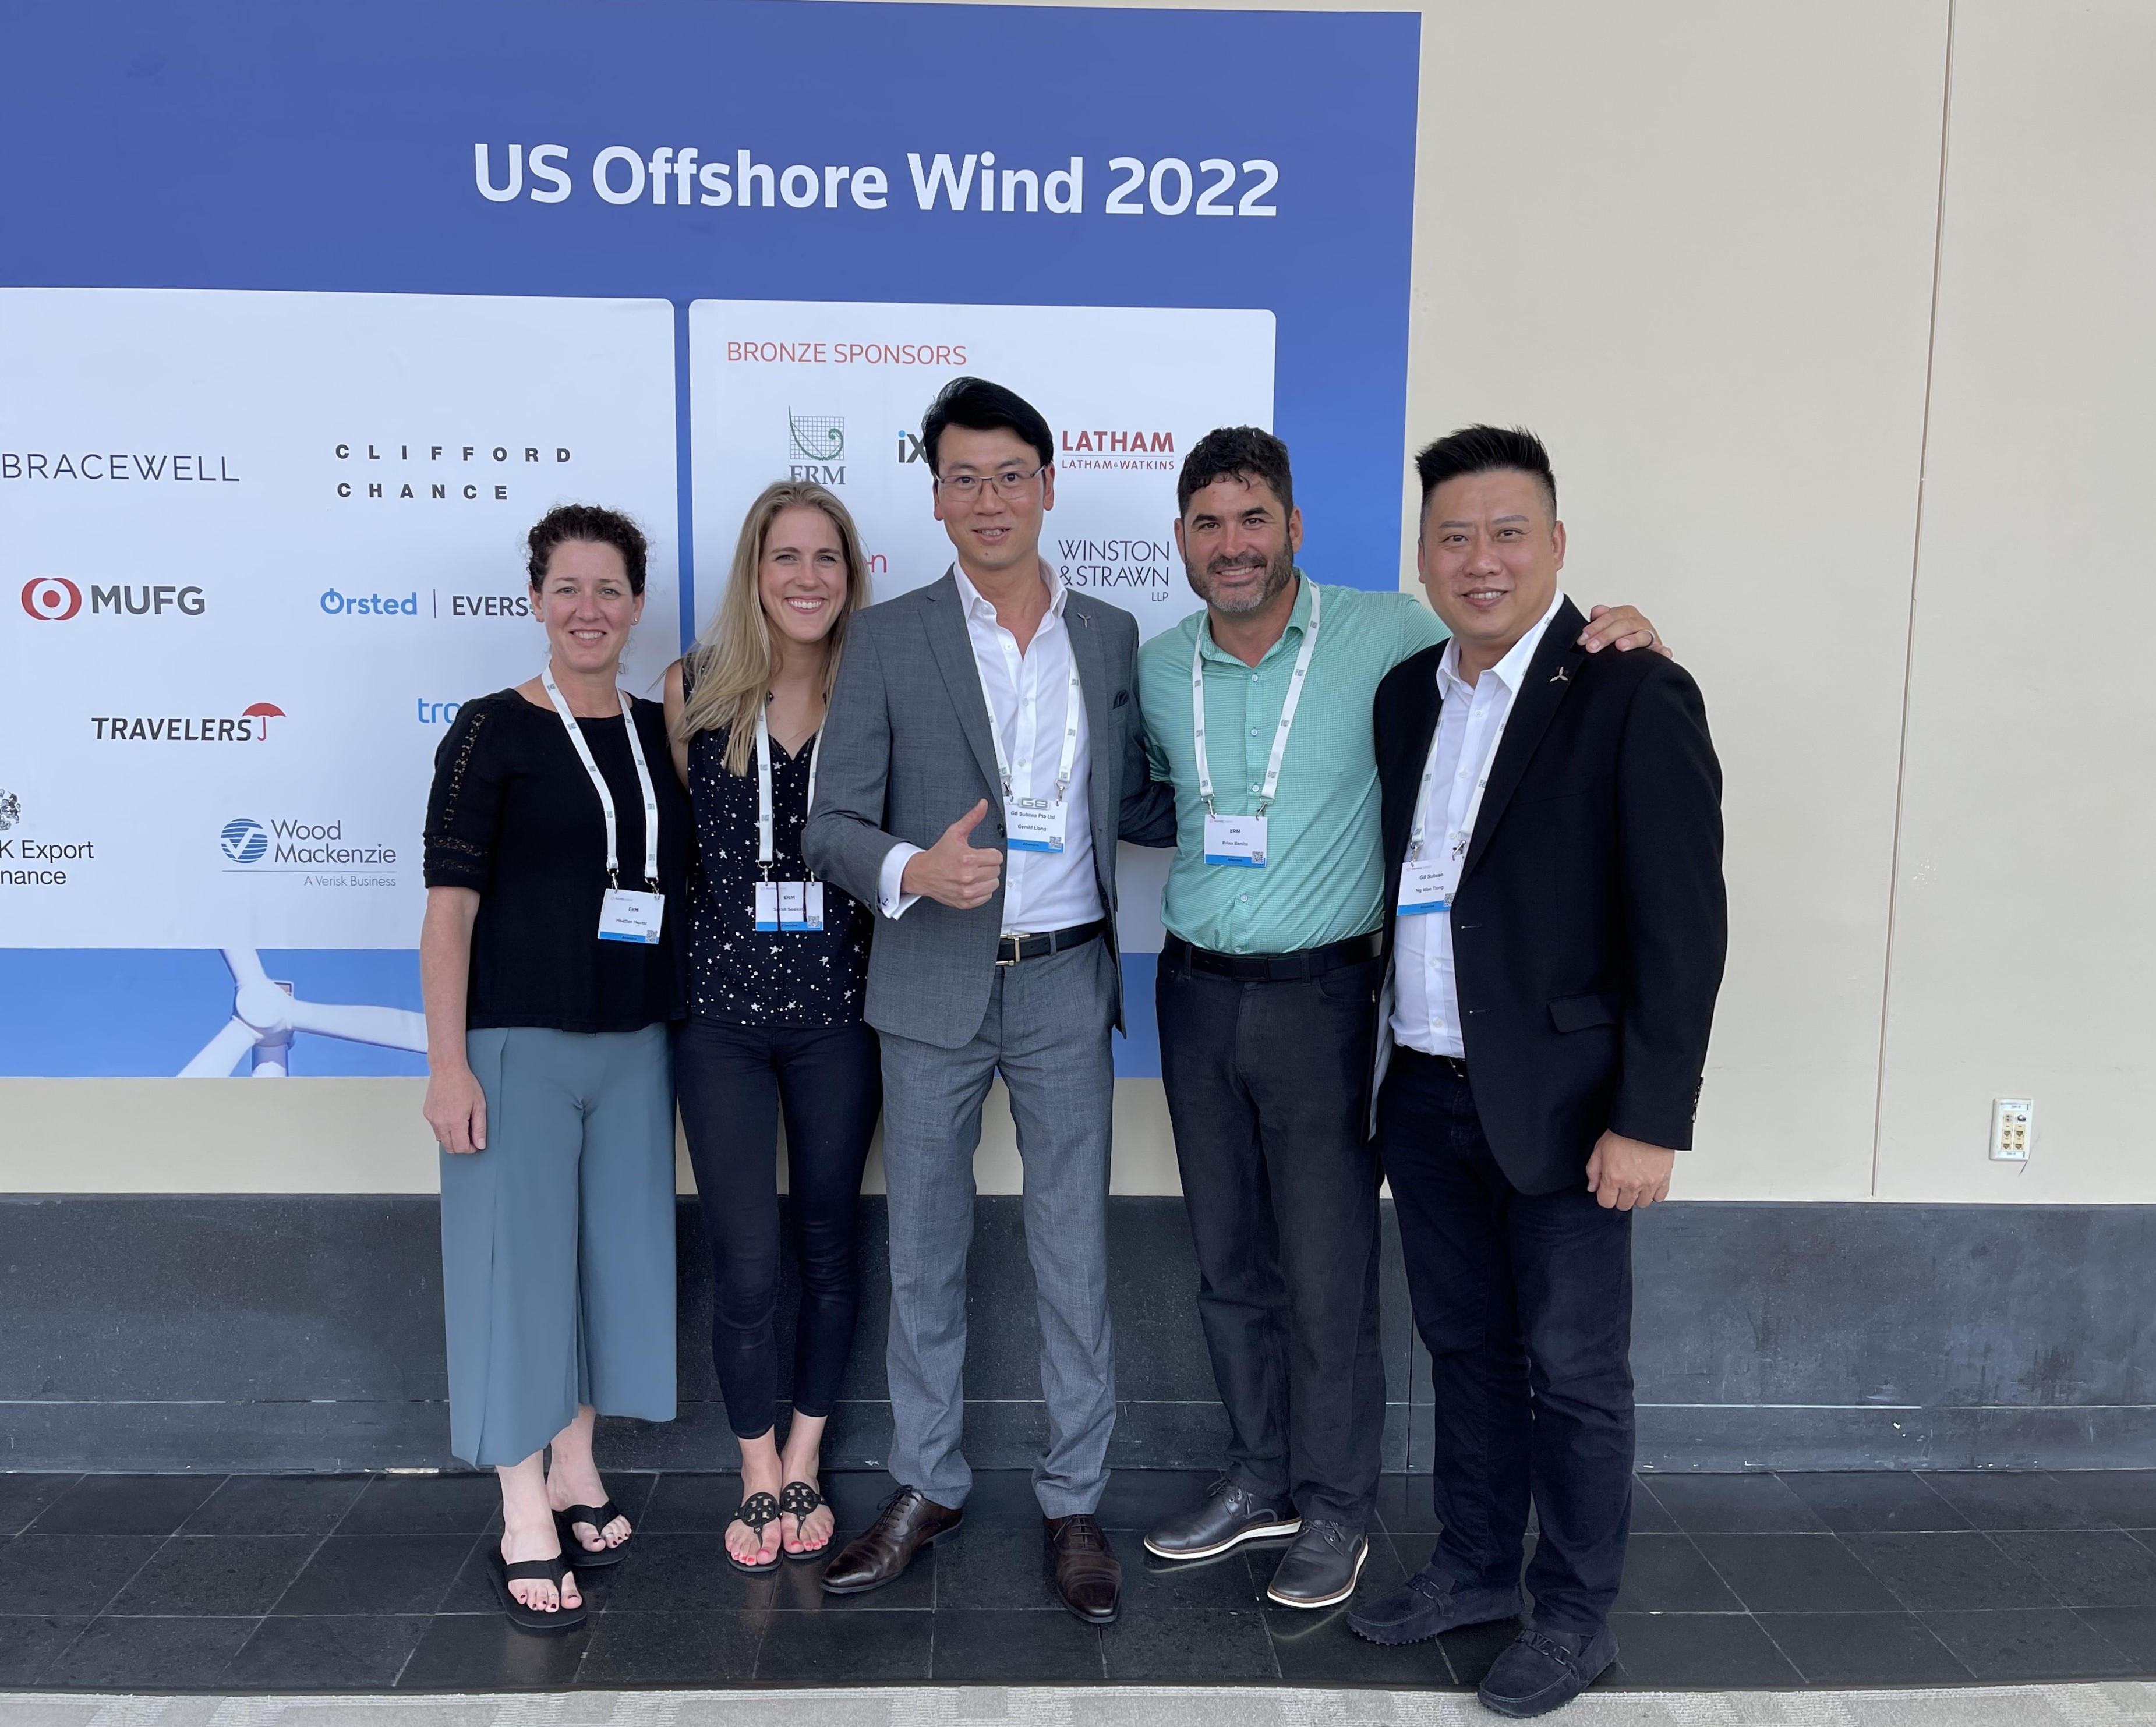 REUTERS EVENT: US Offshore Wind Farm 2022 in Boston